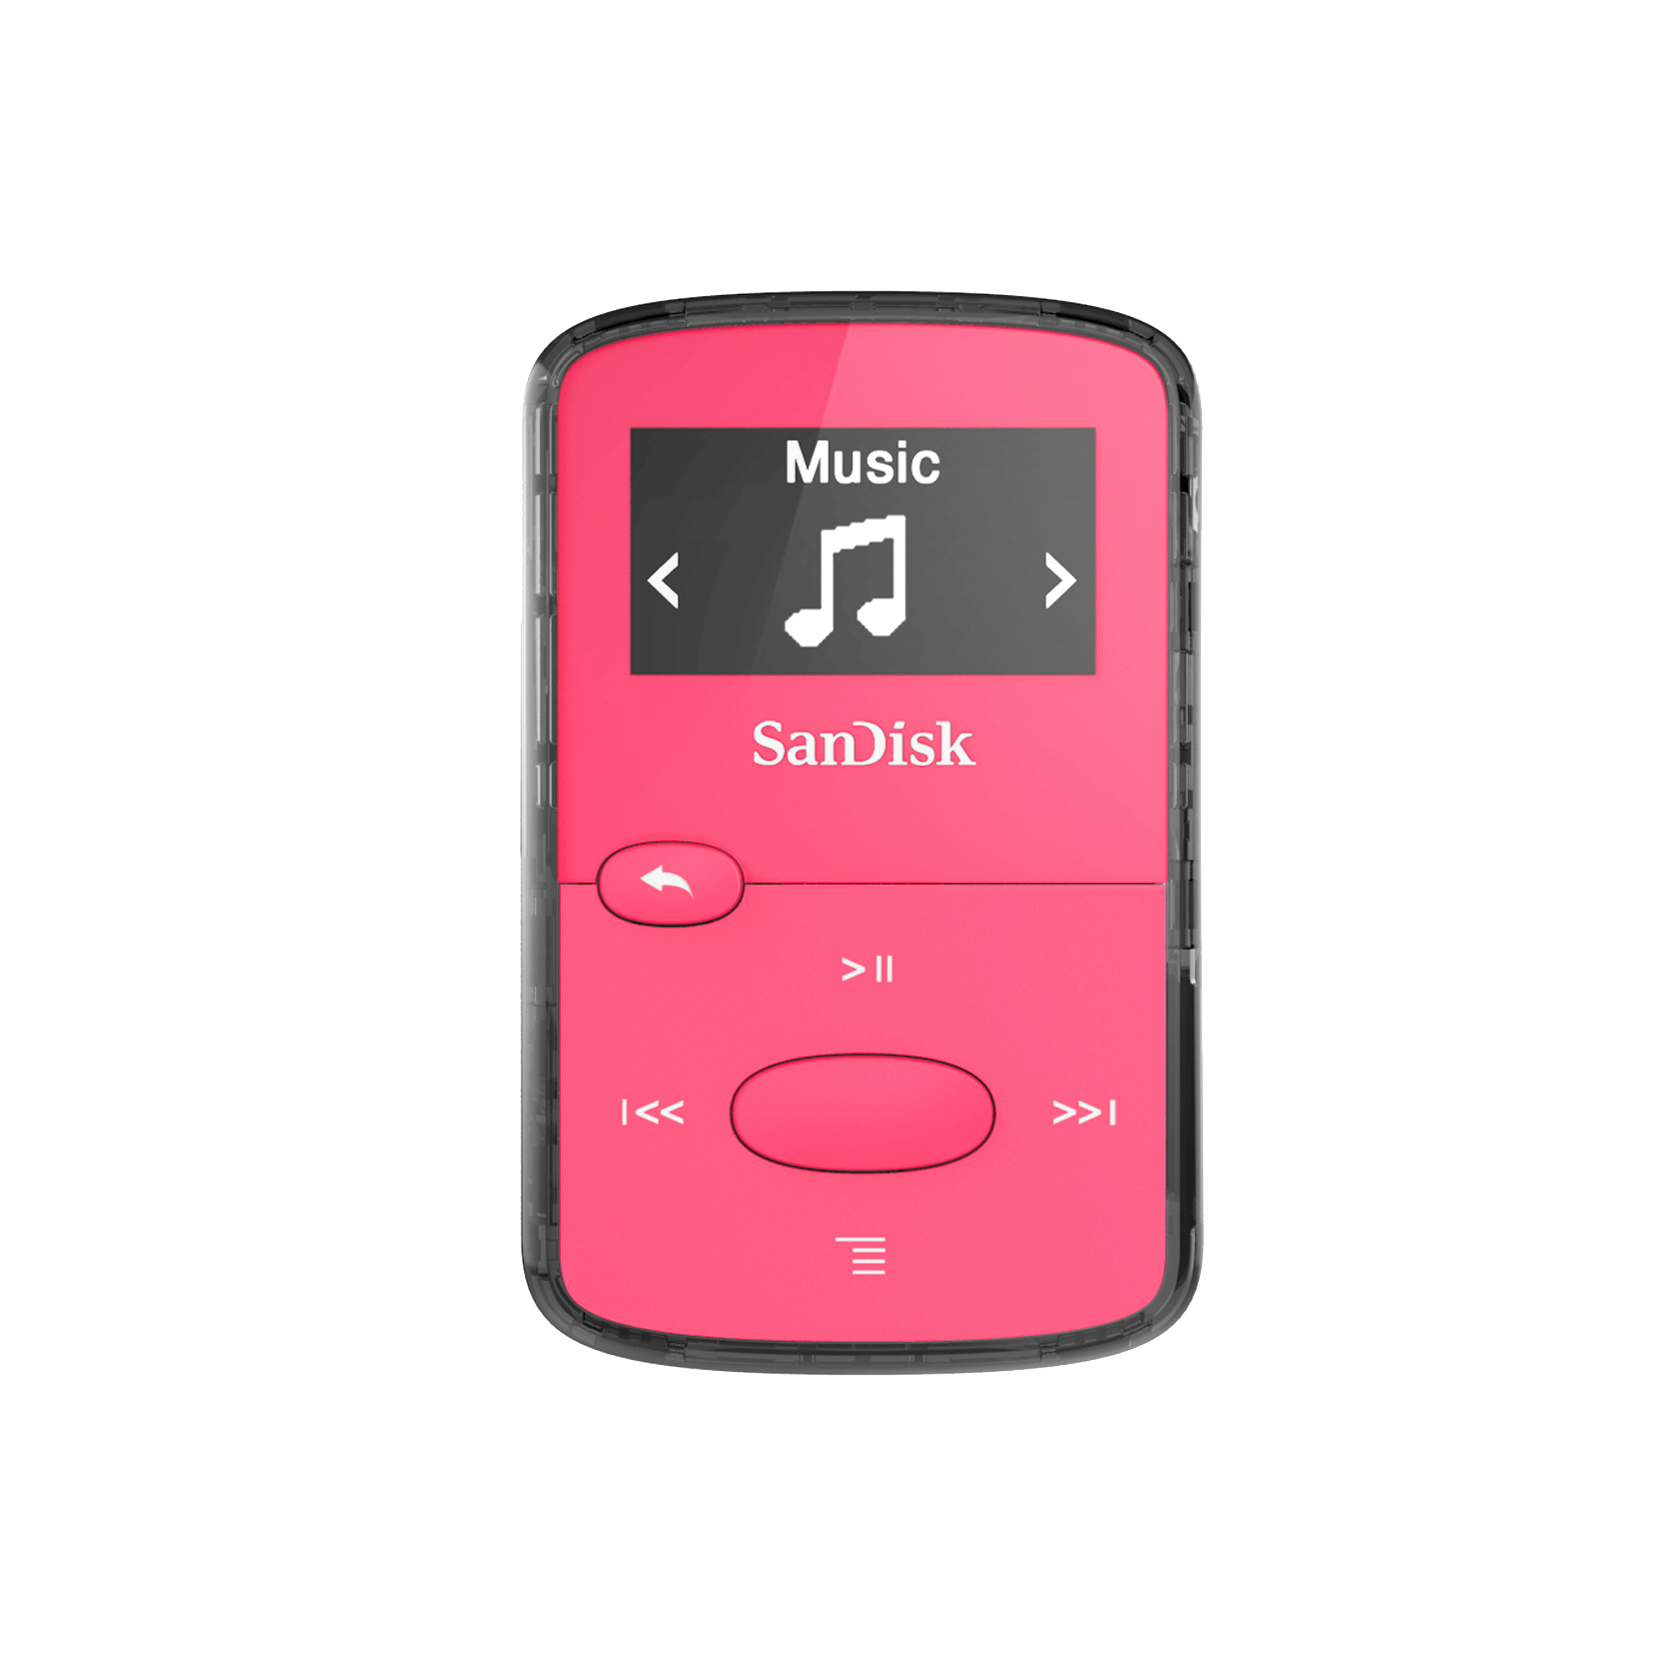 Sandisk Clip Jam 8GB MP3 player Pink